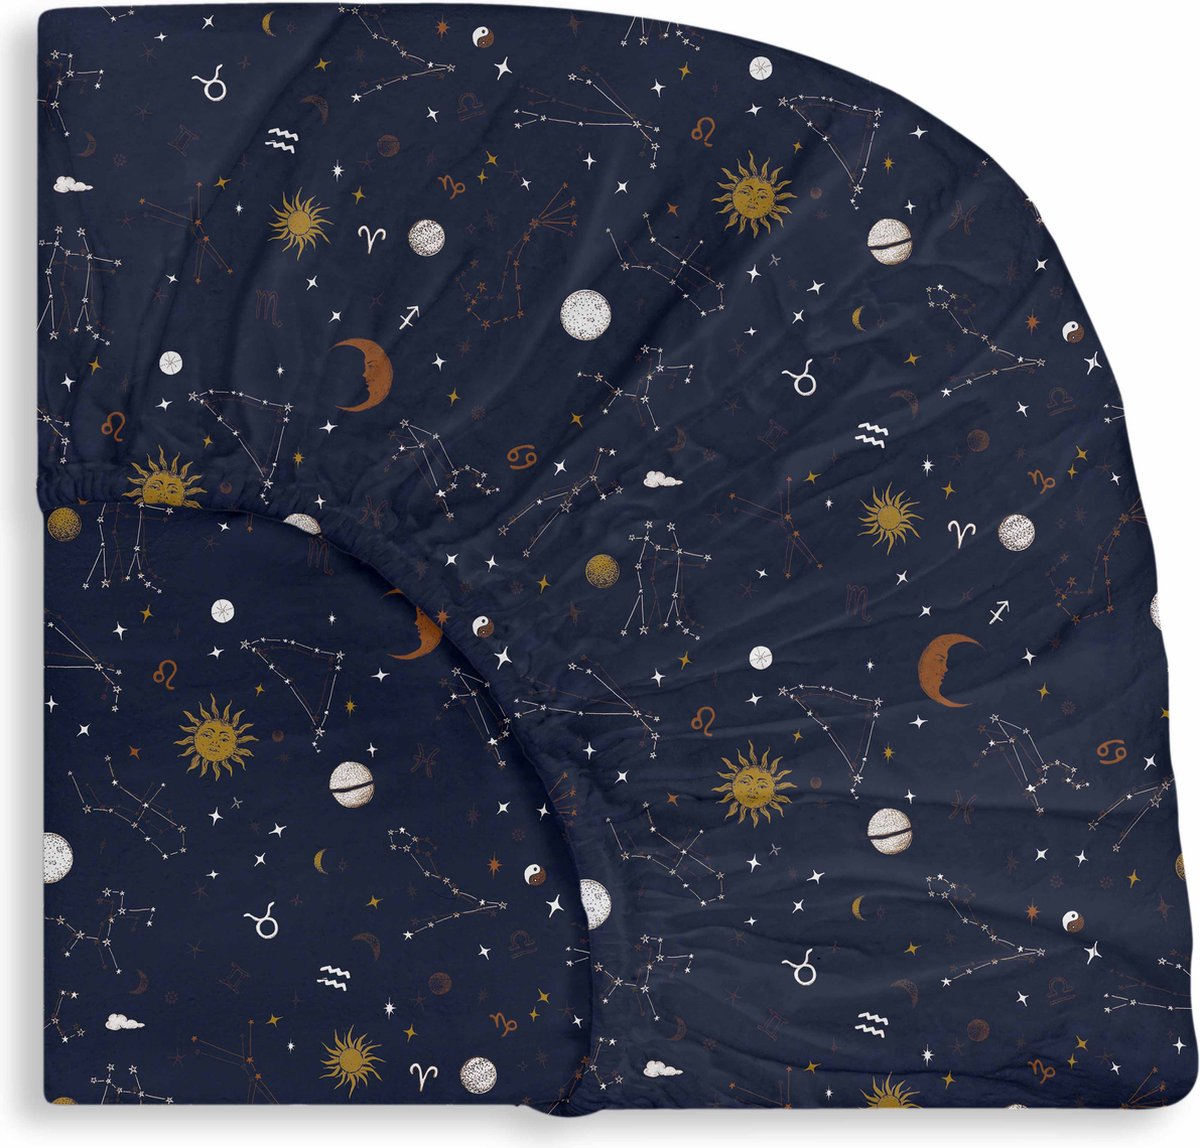 LIS LABELS - Hoeslaken - Galaxy - 70x140 cm - Katoen - Kindermatras